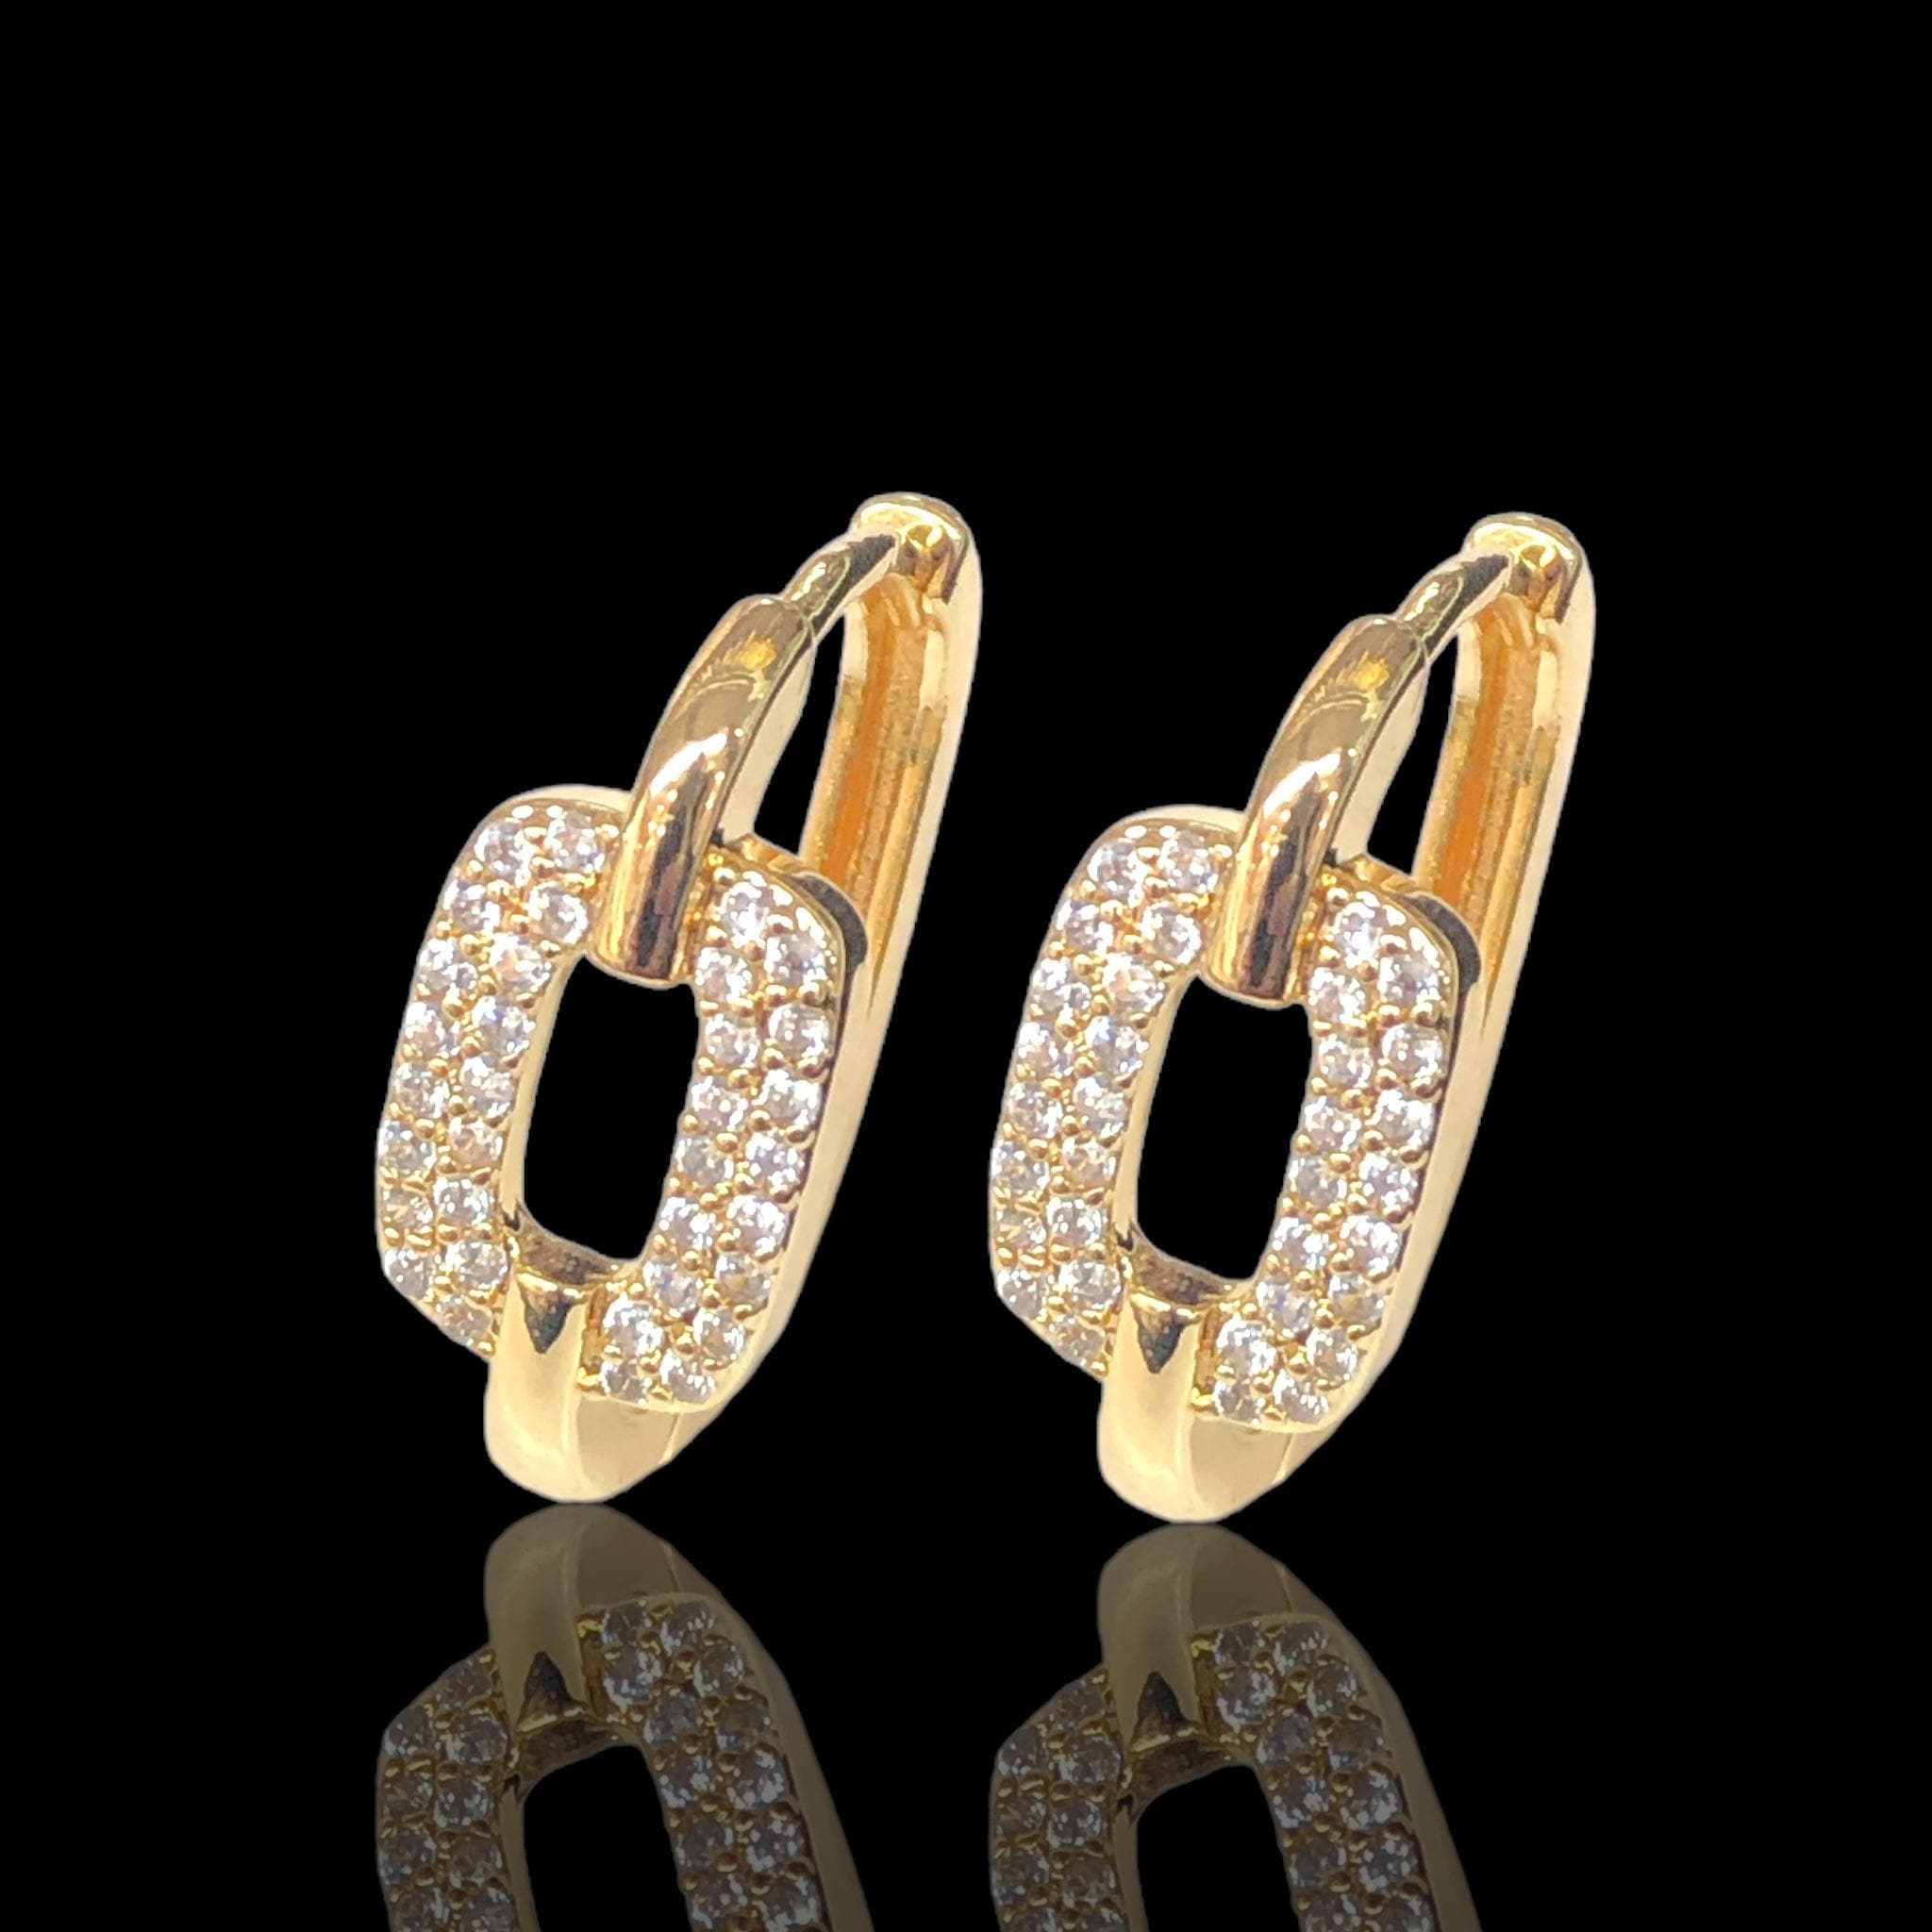 18K Gold Filled Norway Chic CZ Earrings- kuania oro laminado